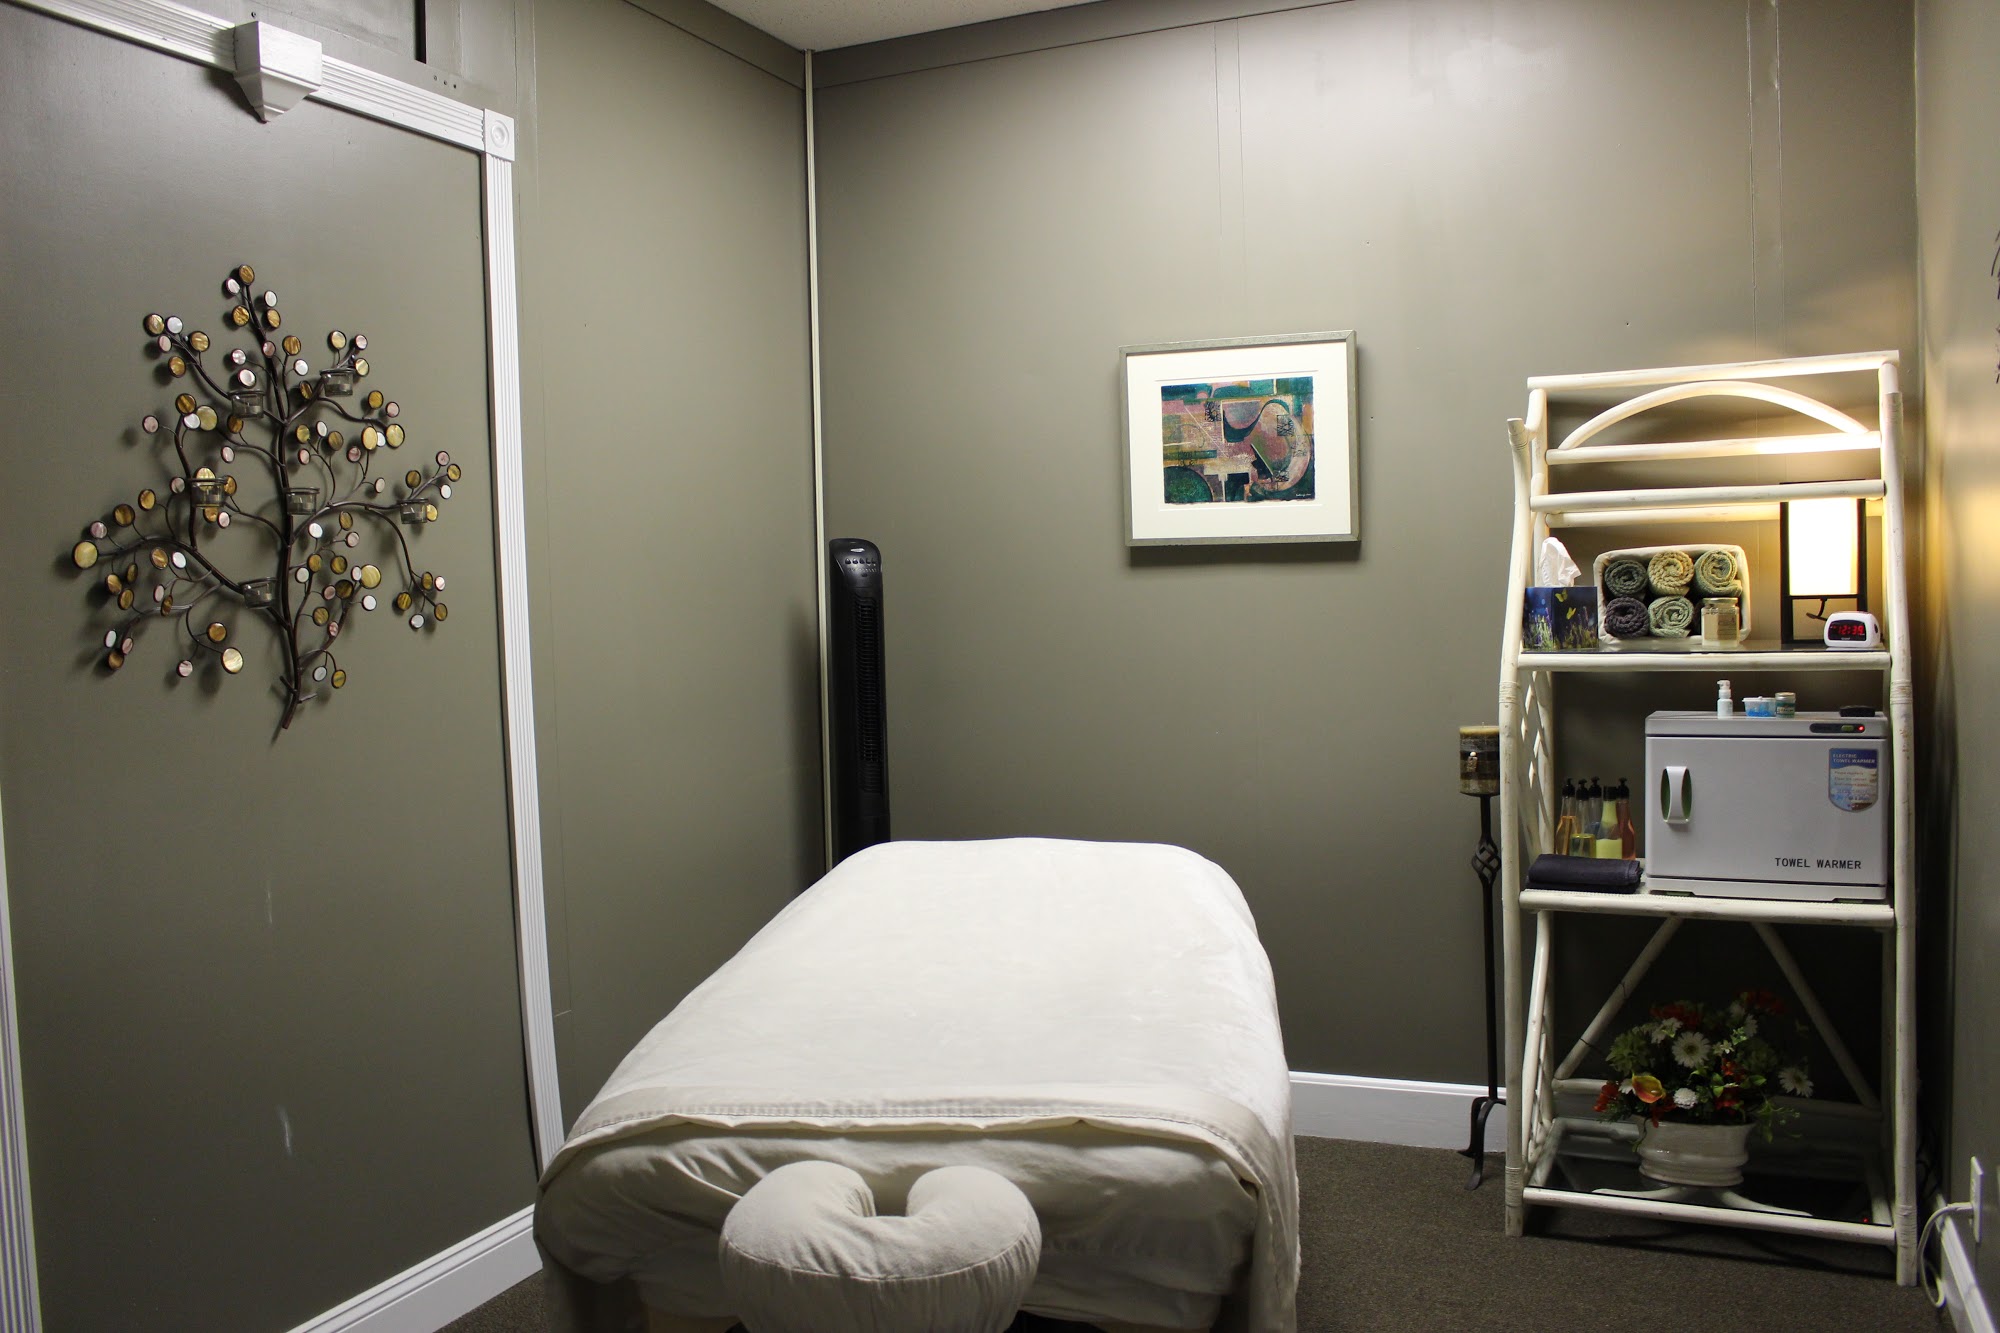 Body & Sole Therapy Salon and Spa